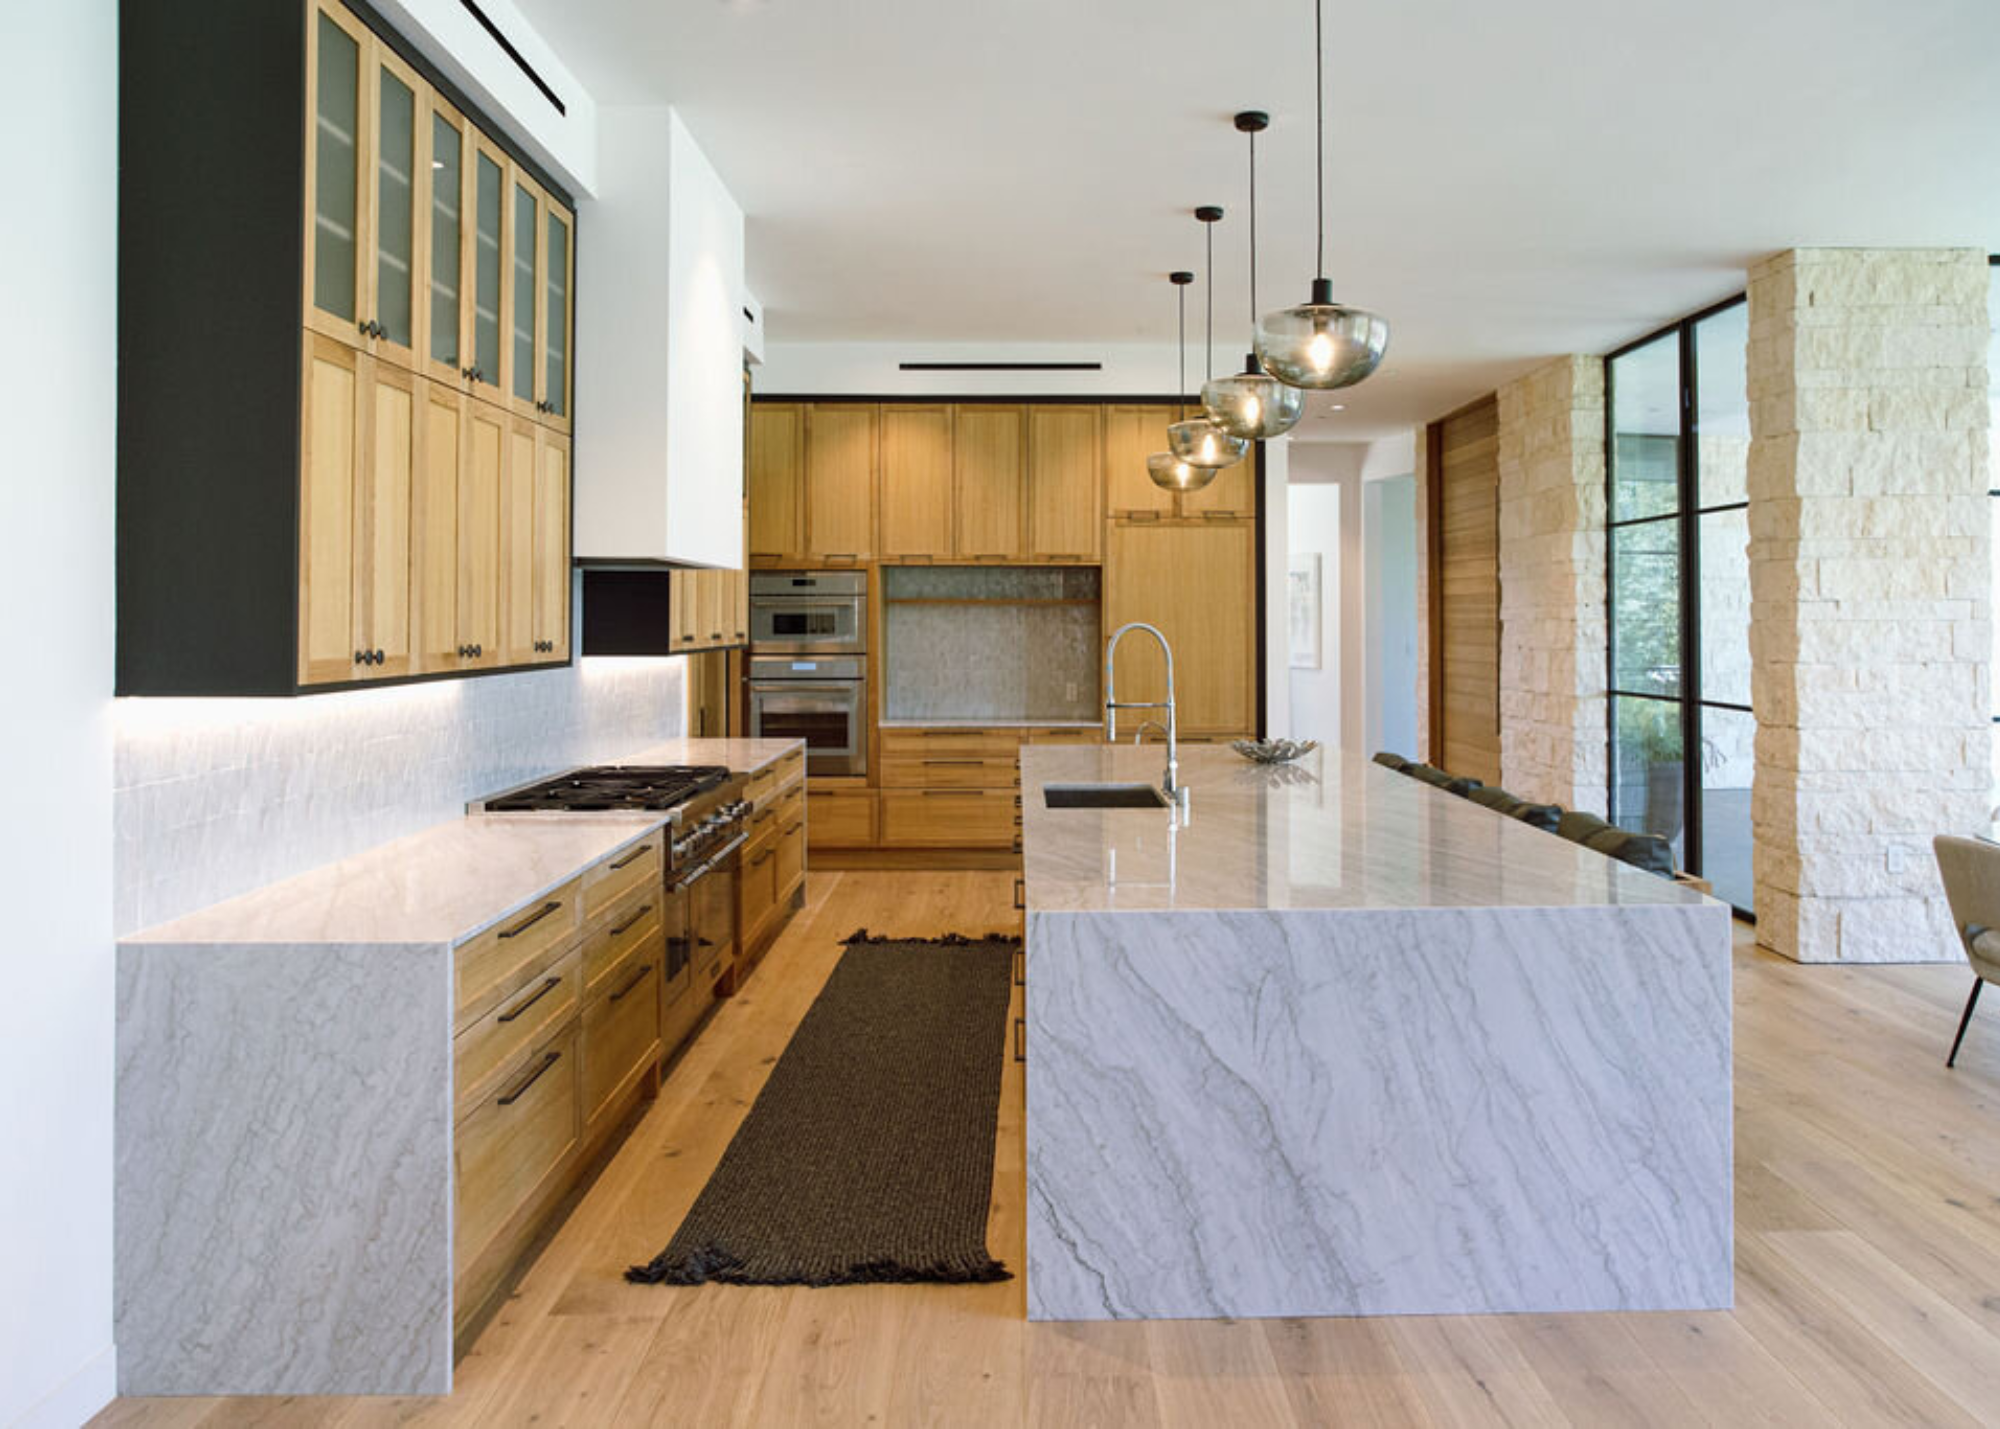 Unique Hardwood flooring inspiration kitchen